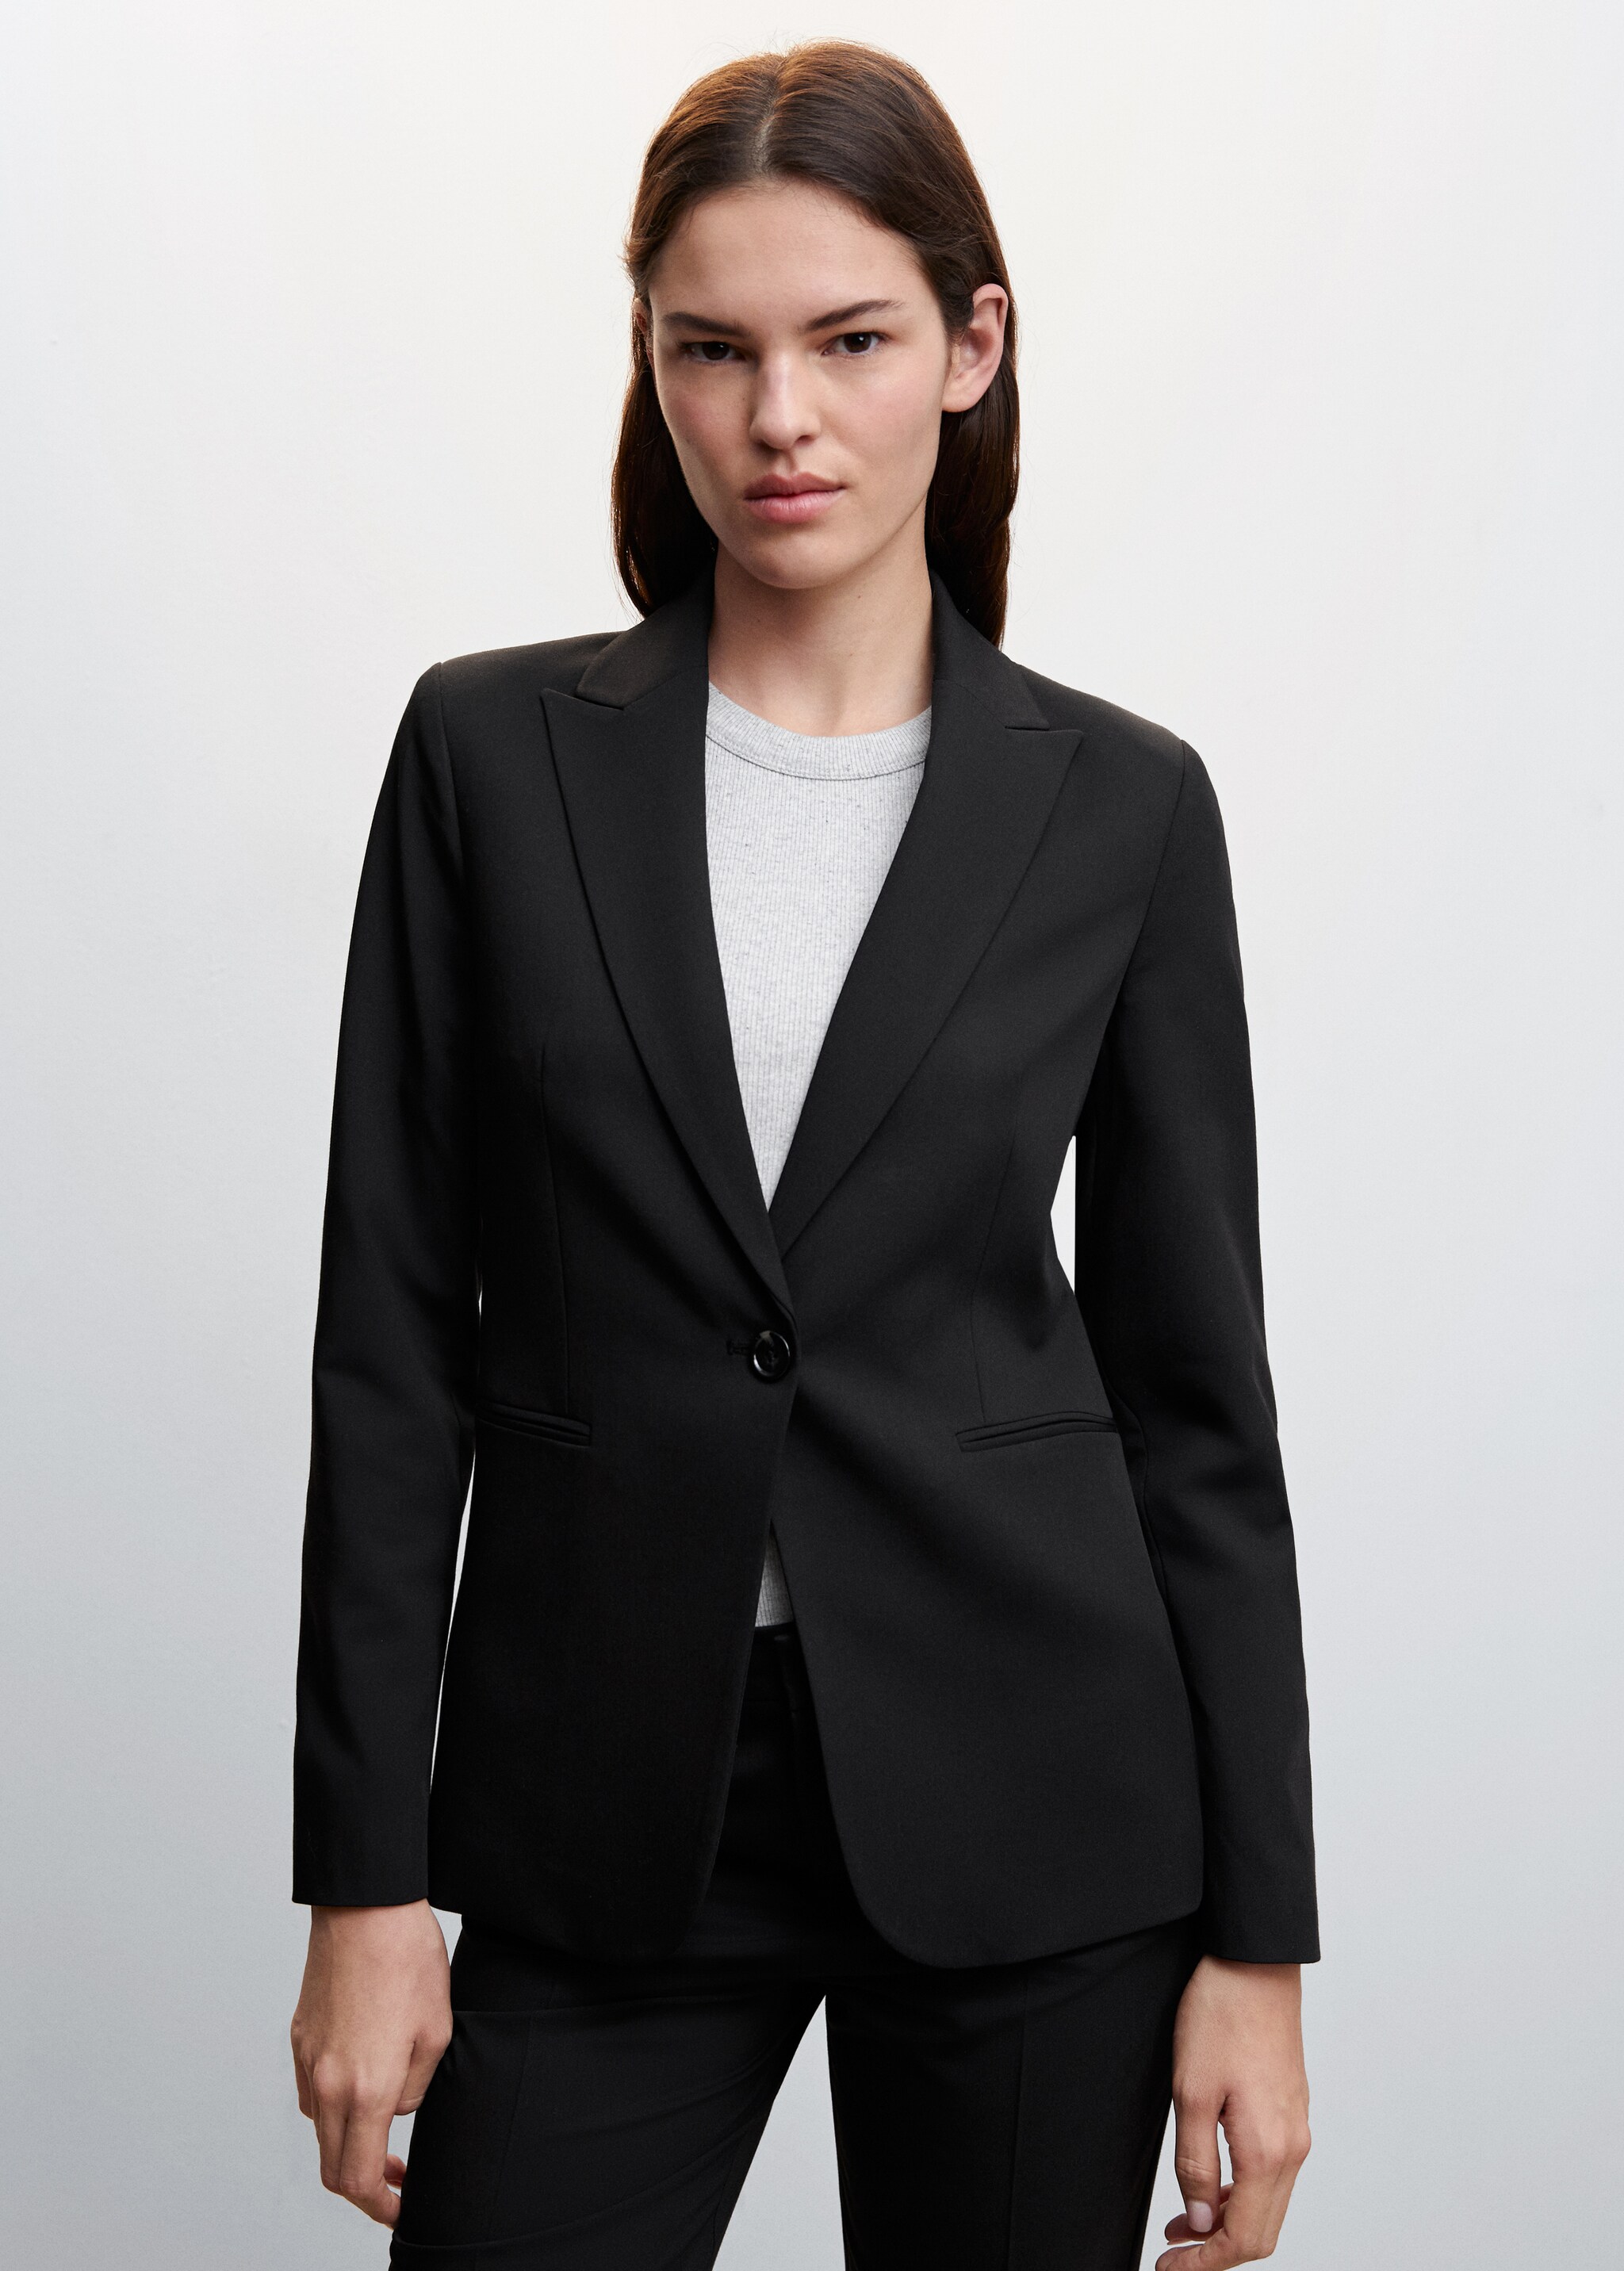 Fitted suit jacket - Medium plane